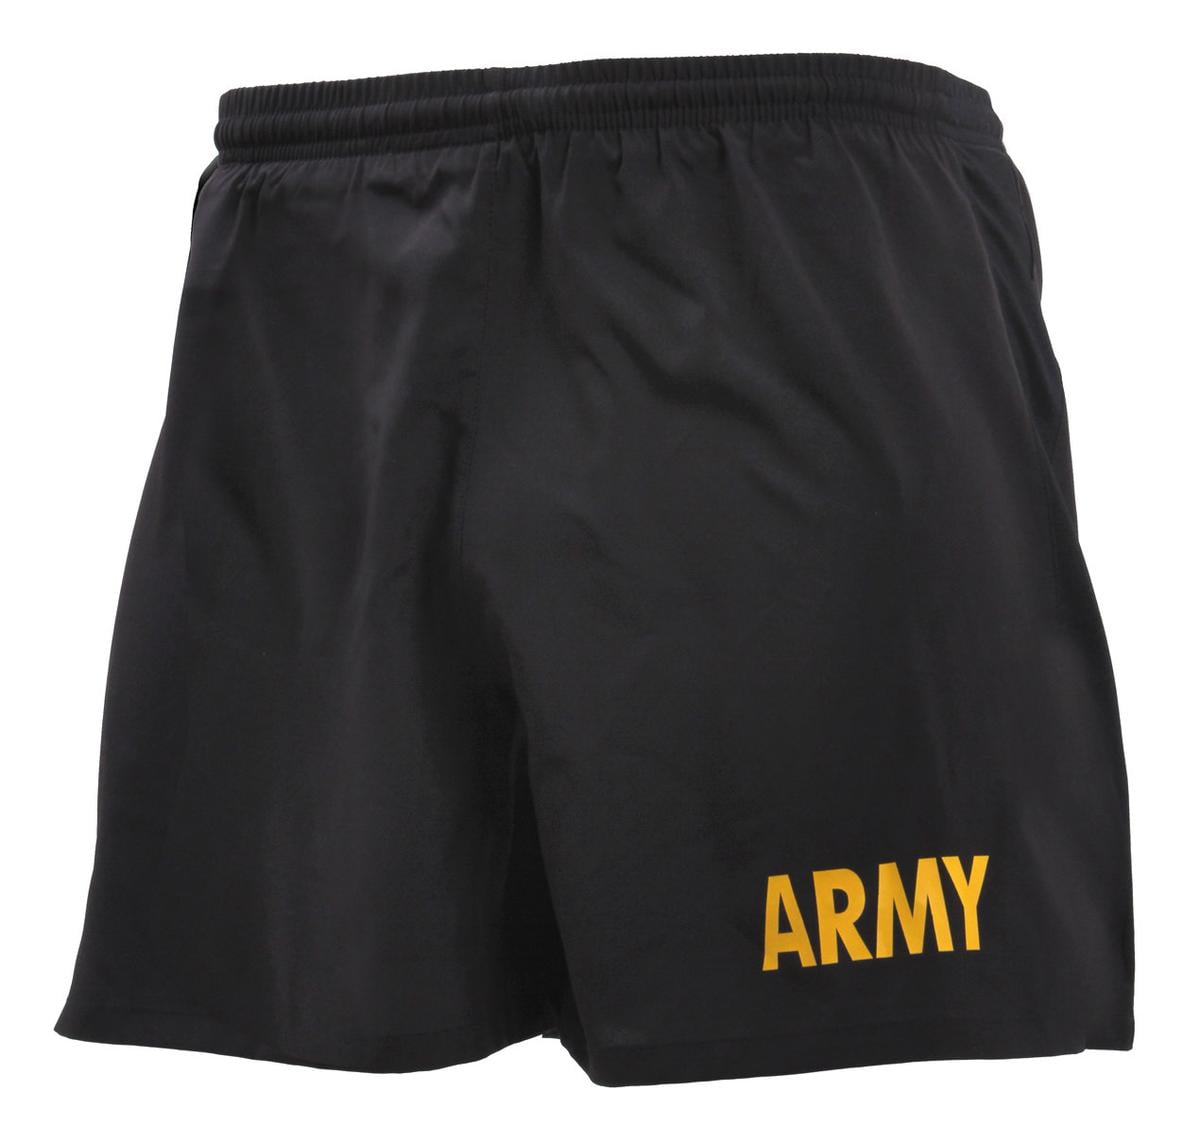 Army Physical Training PT Shorts, Black, Medium